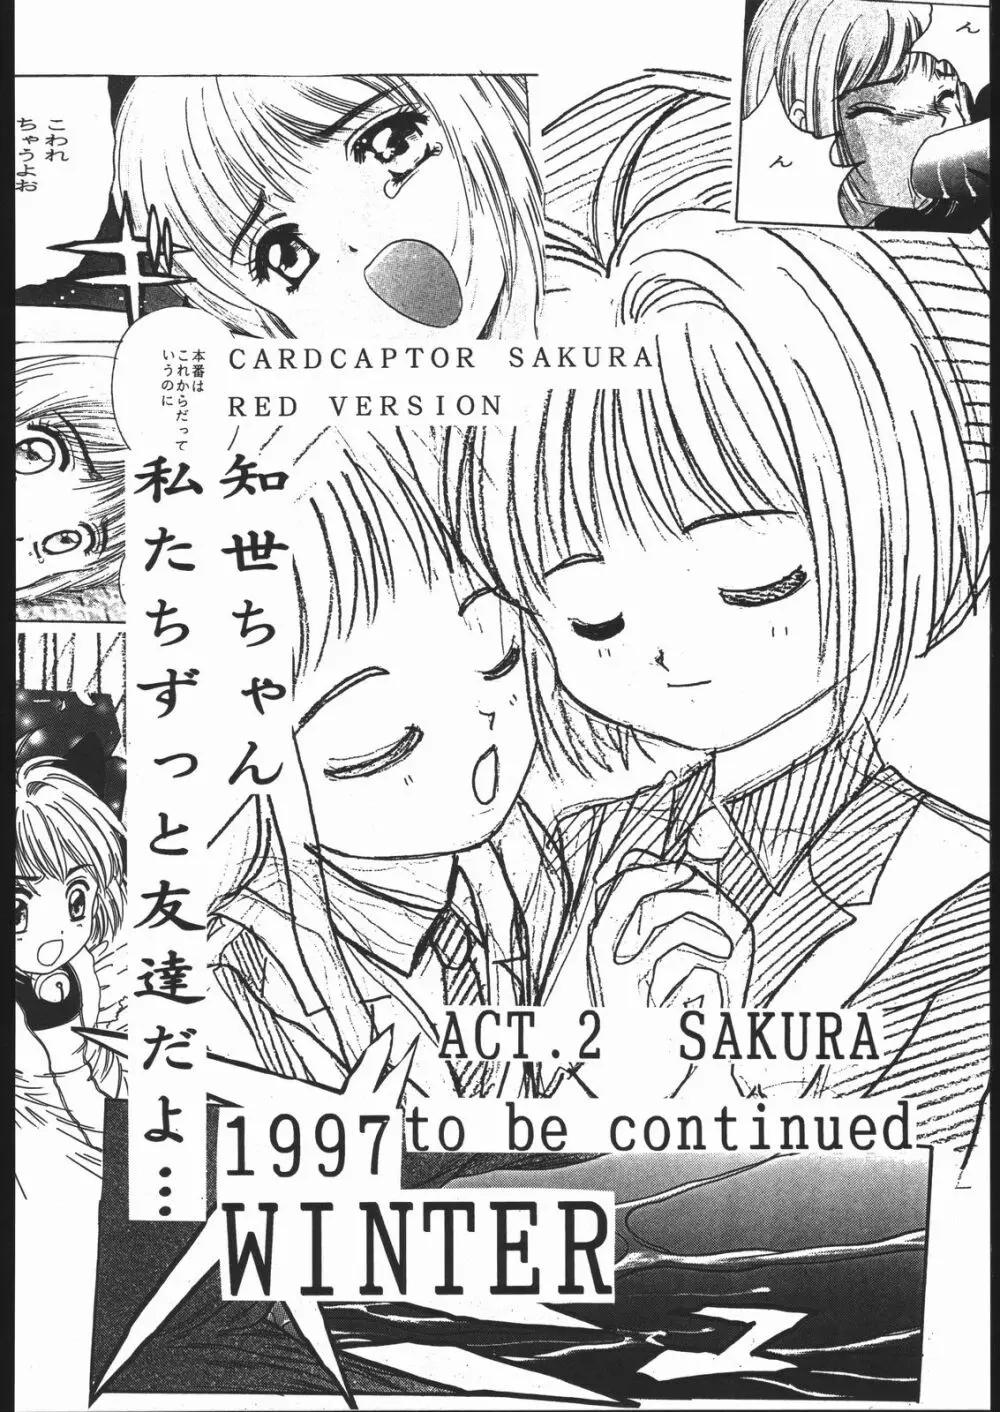 Card Captor Sakura Blue Version - page47